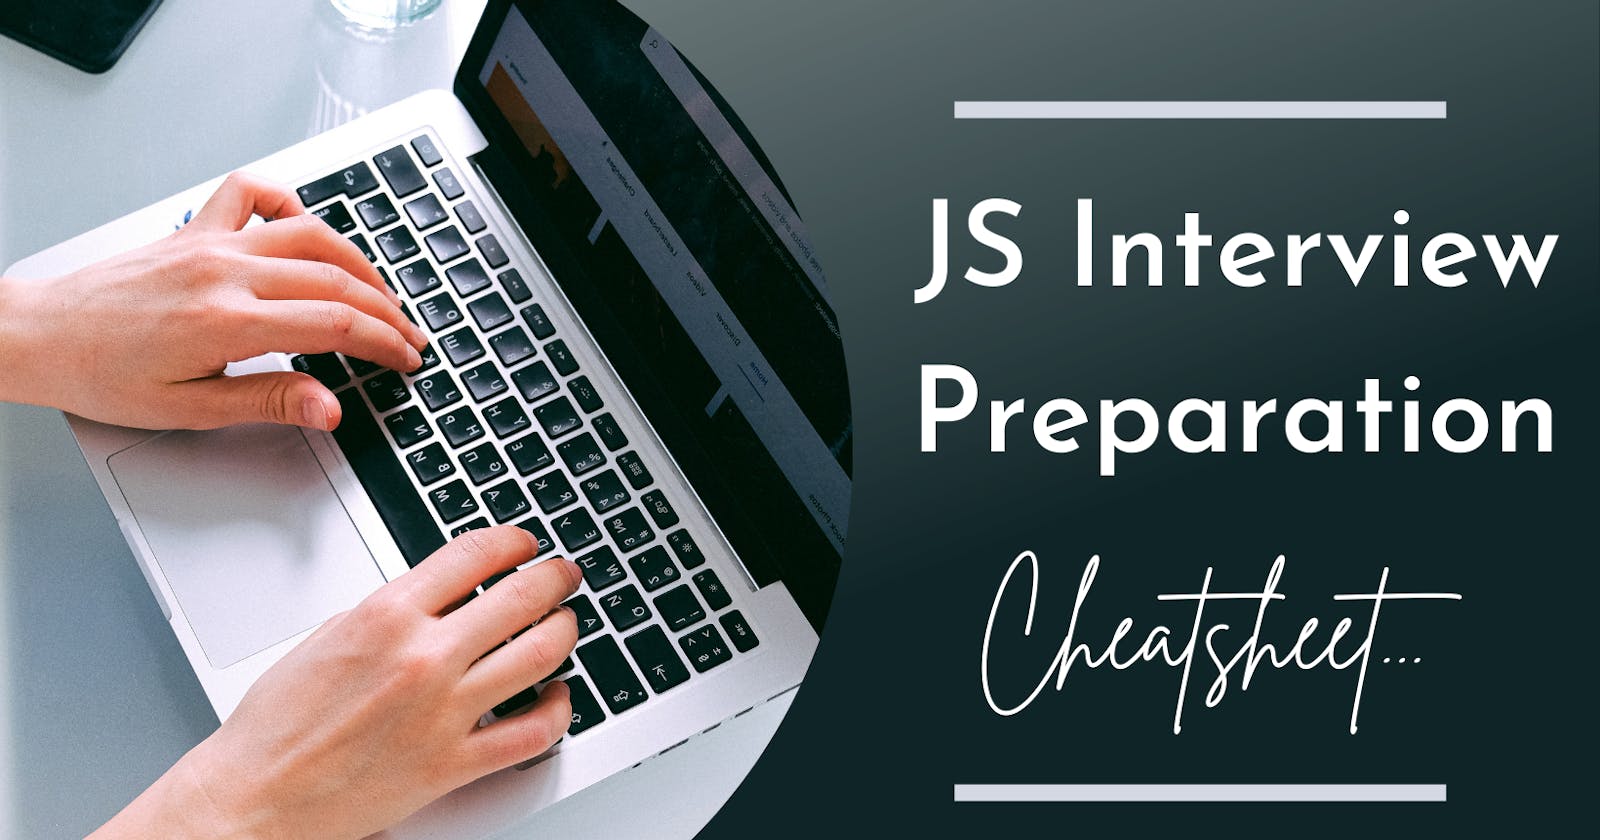 JavaScript Interview Preparation CheatSheet